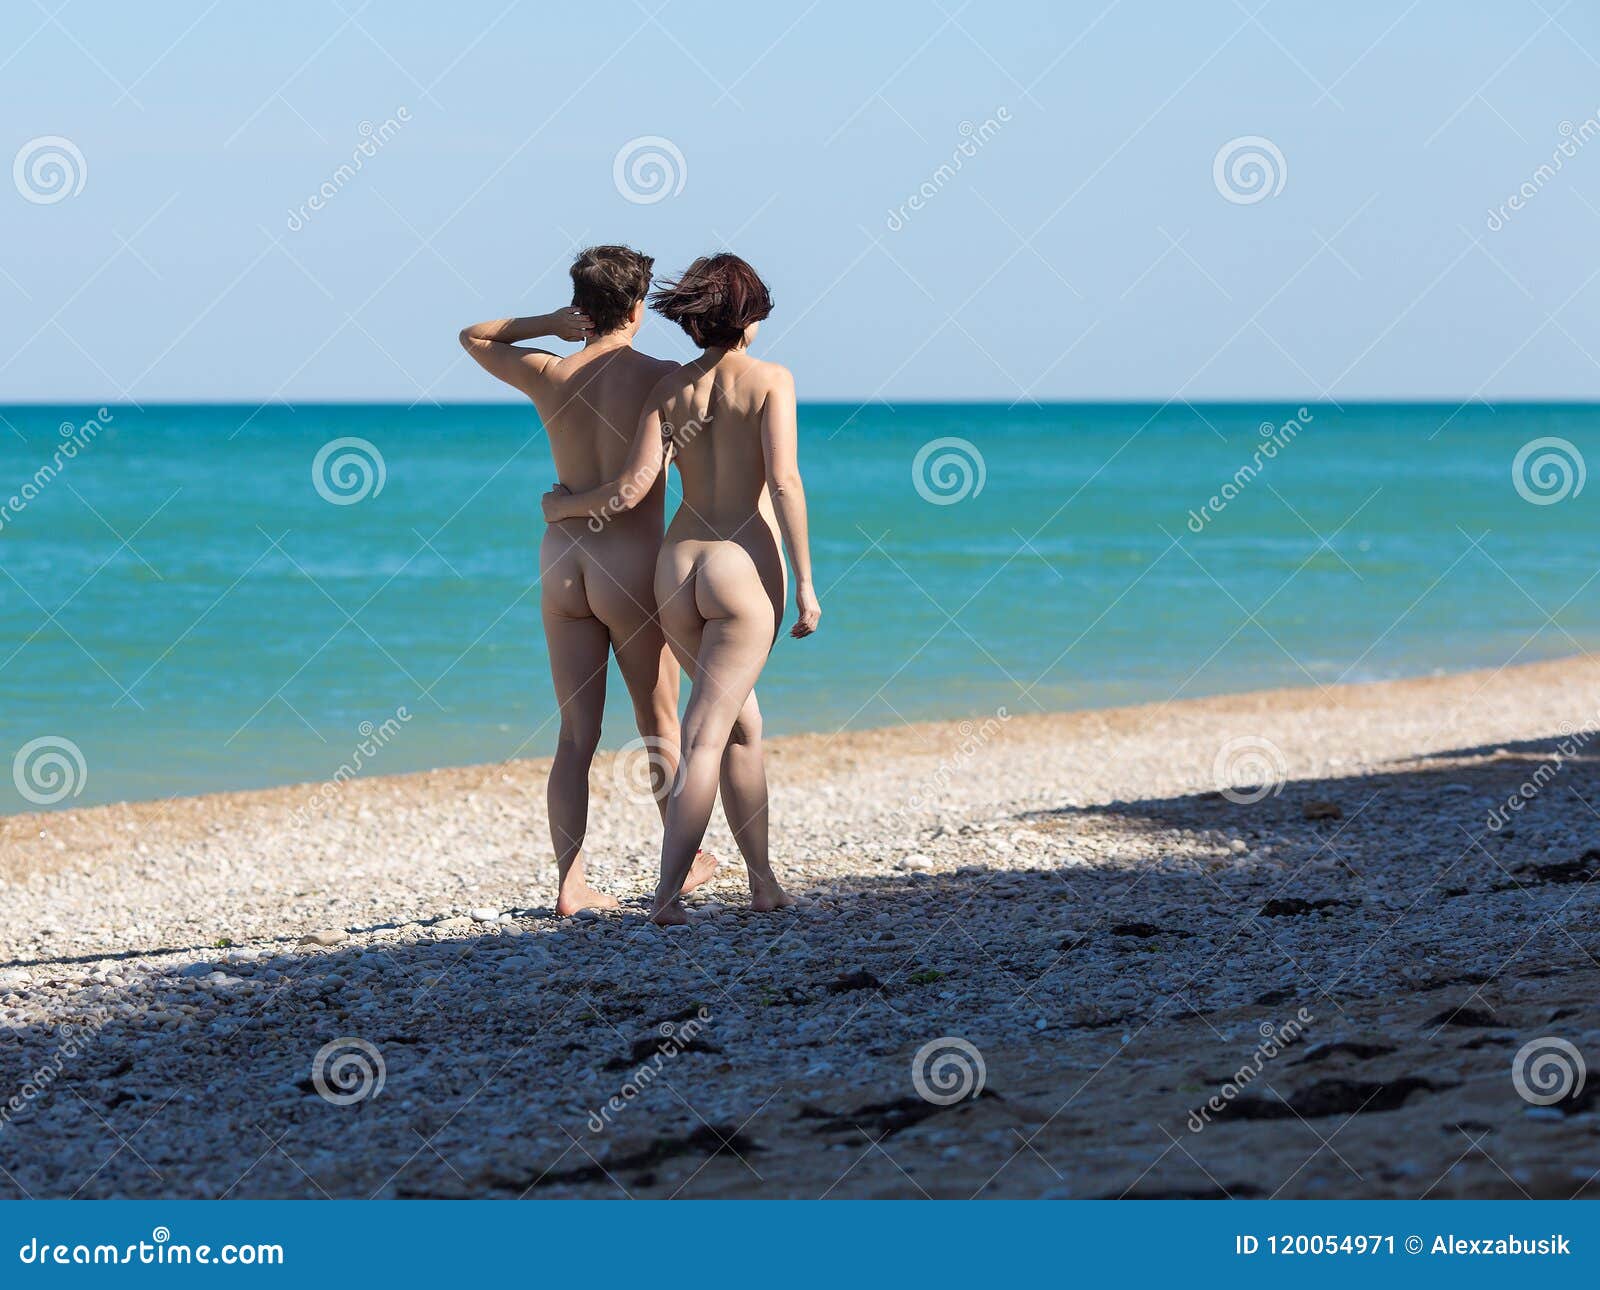 nudiest beach couple  